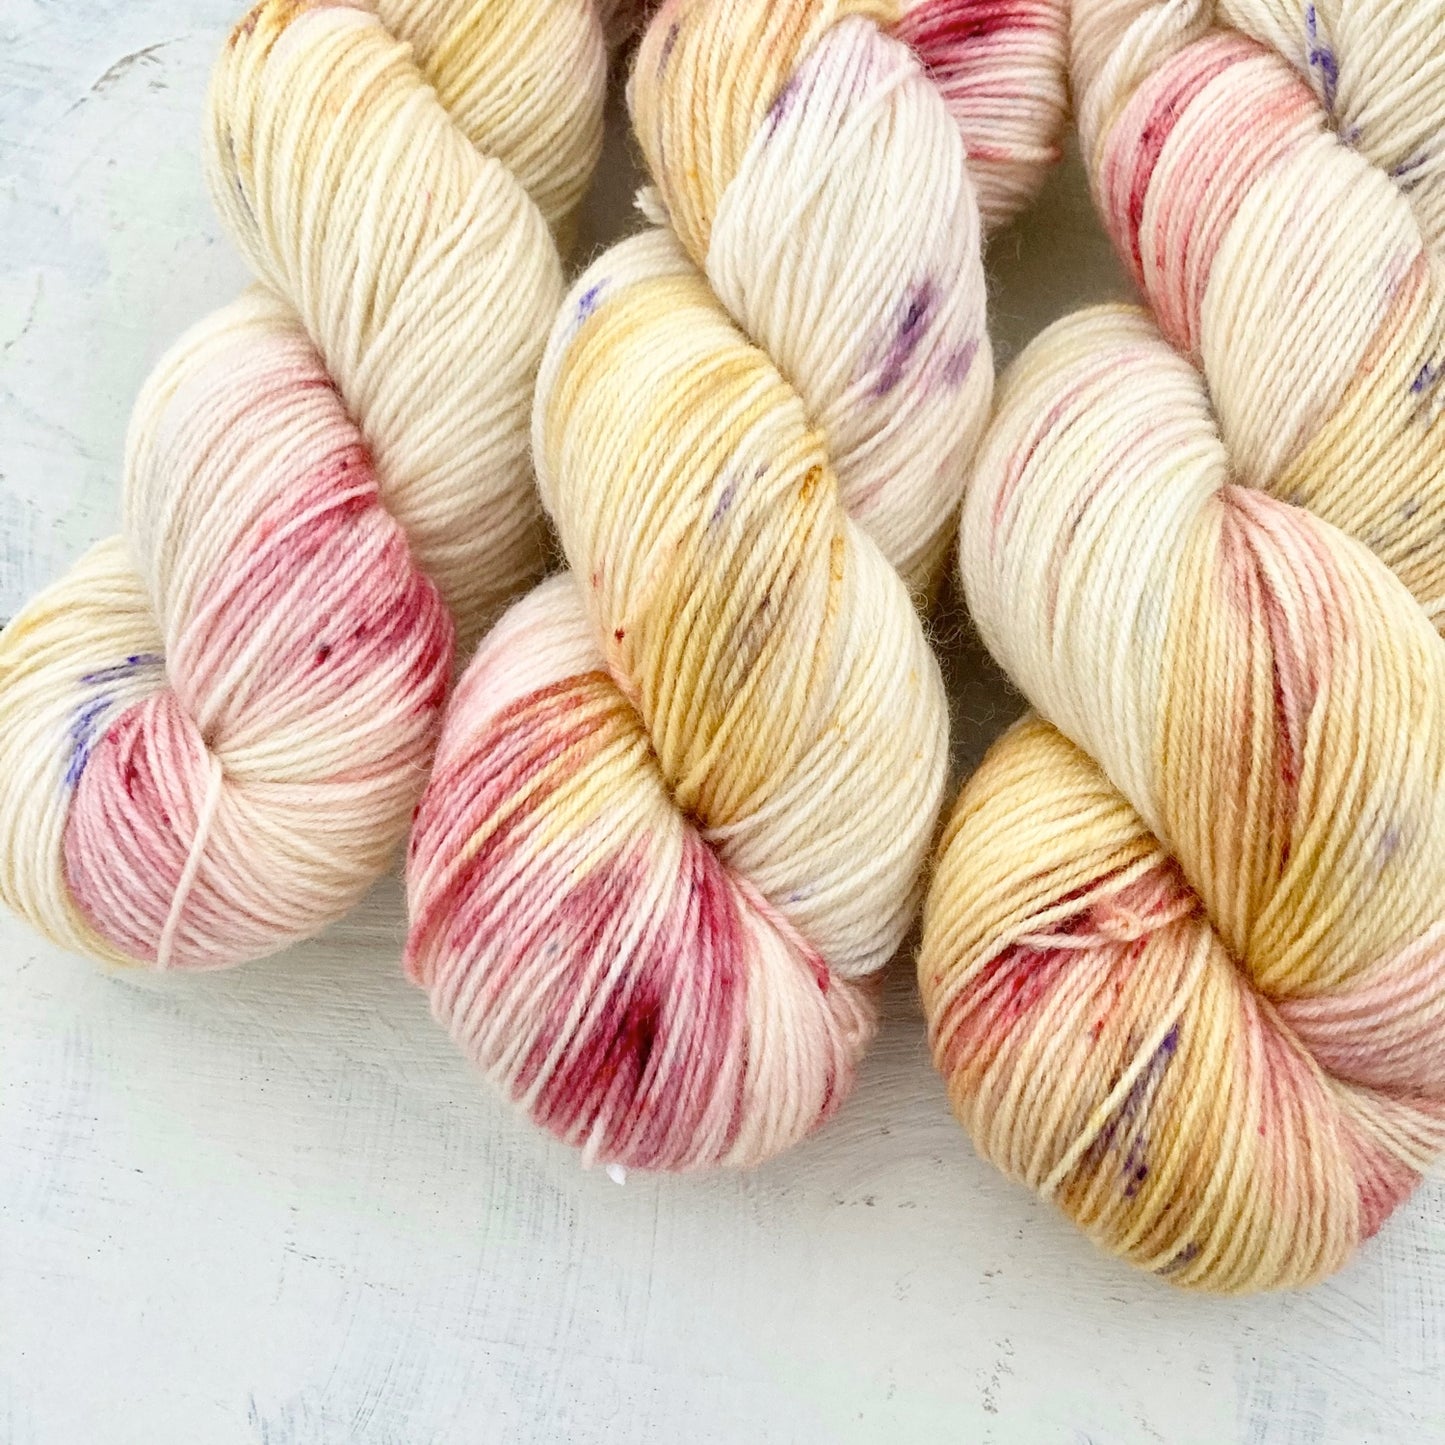 Hand-dyed yarn No.113 sock yarn "Frühling übers Jahr"